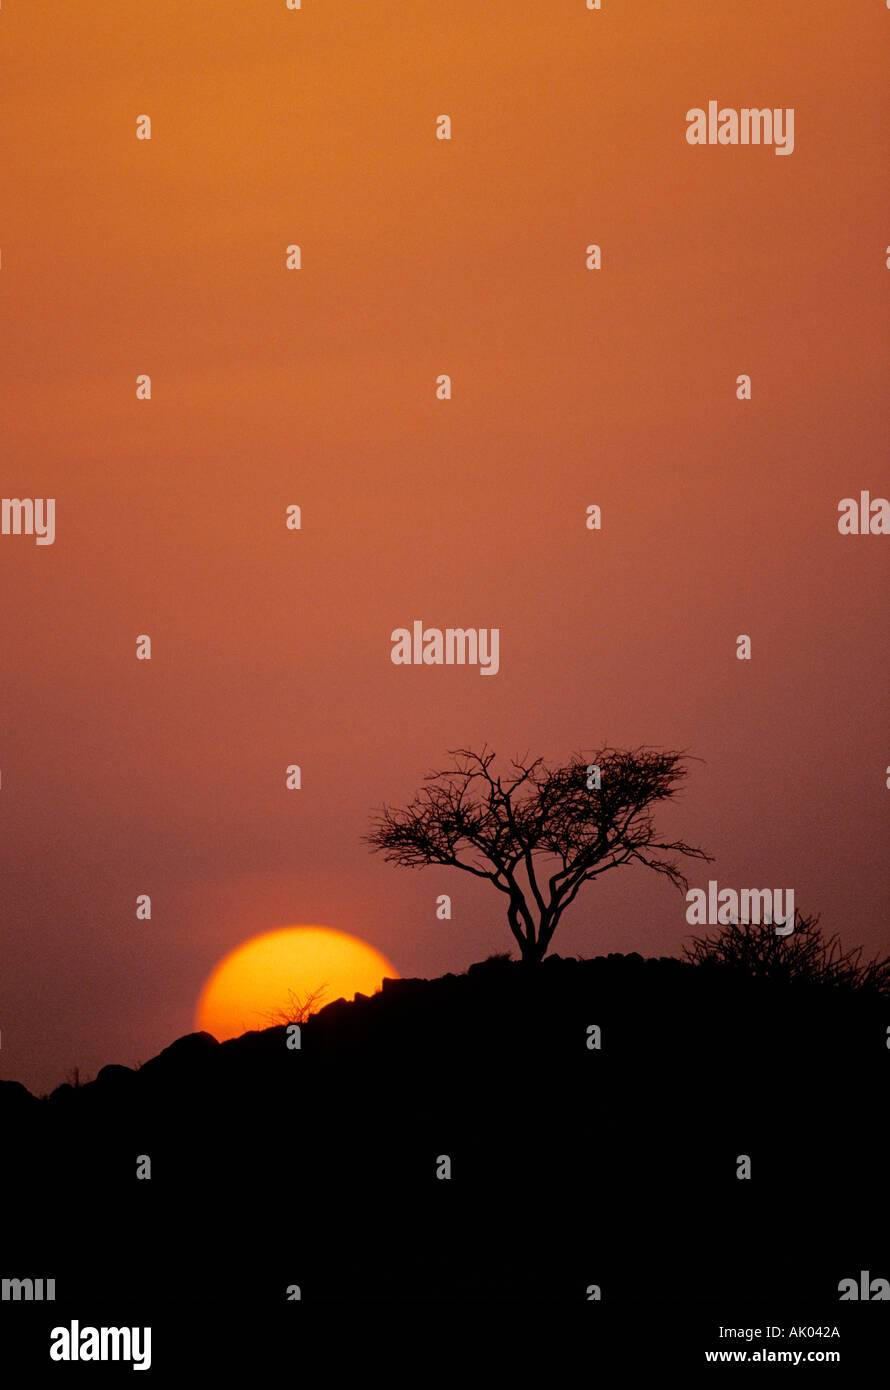 Acacia tree at sunset Saudi Arabia Stock Photo - Alamy